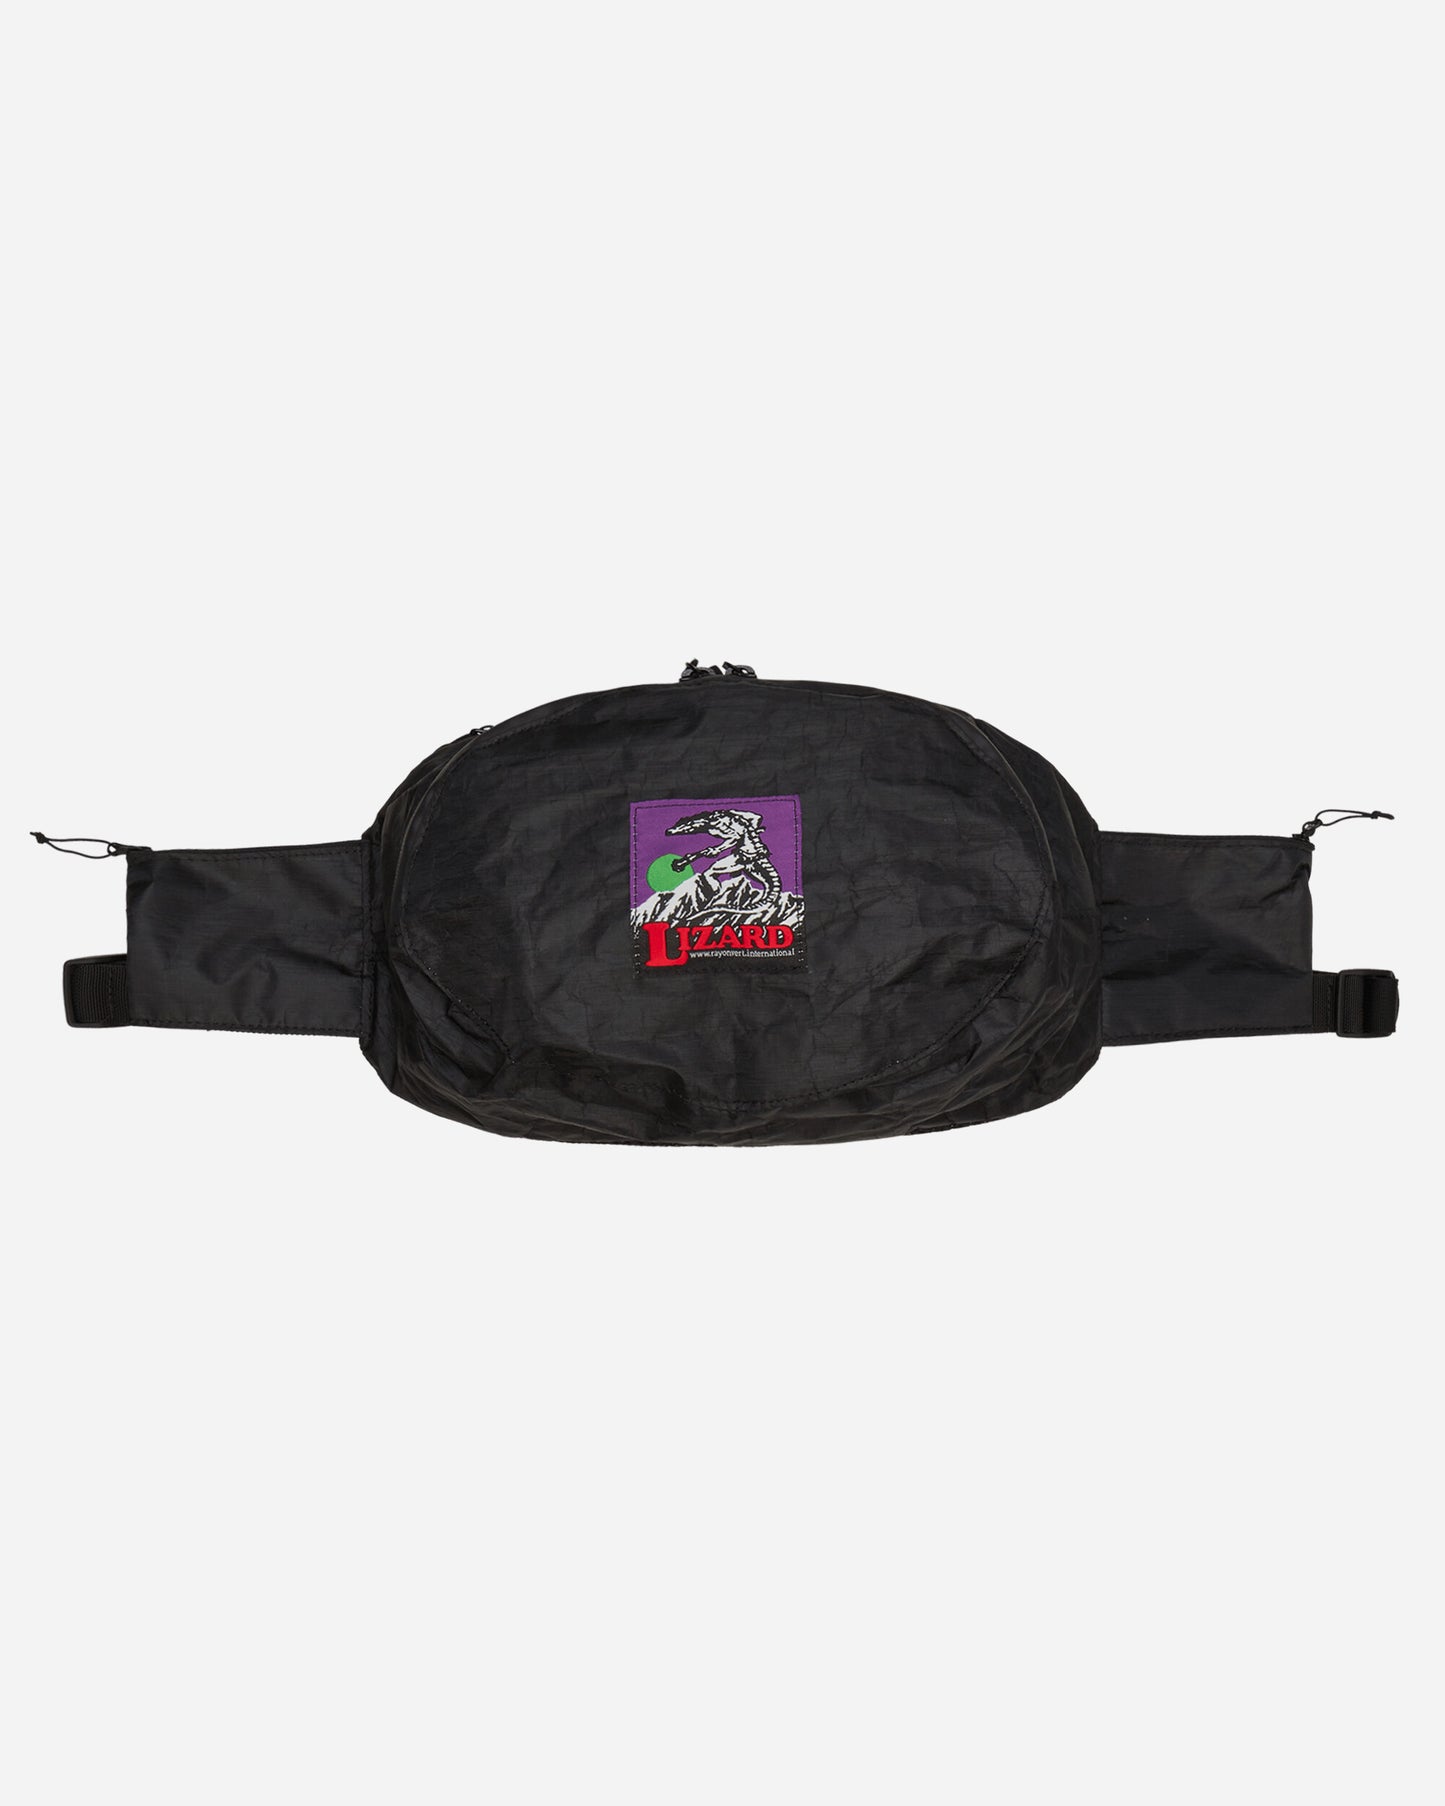 Rayon Vert Sheldon Pack Golgotha Black Bags and Backpacks Waistbags RVS2-BG16 1